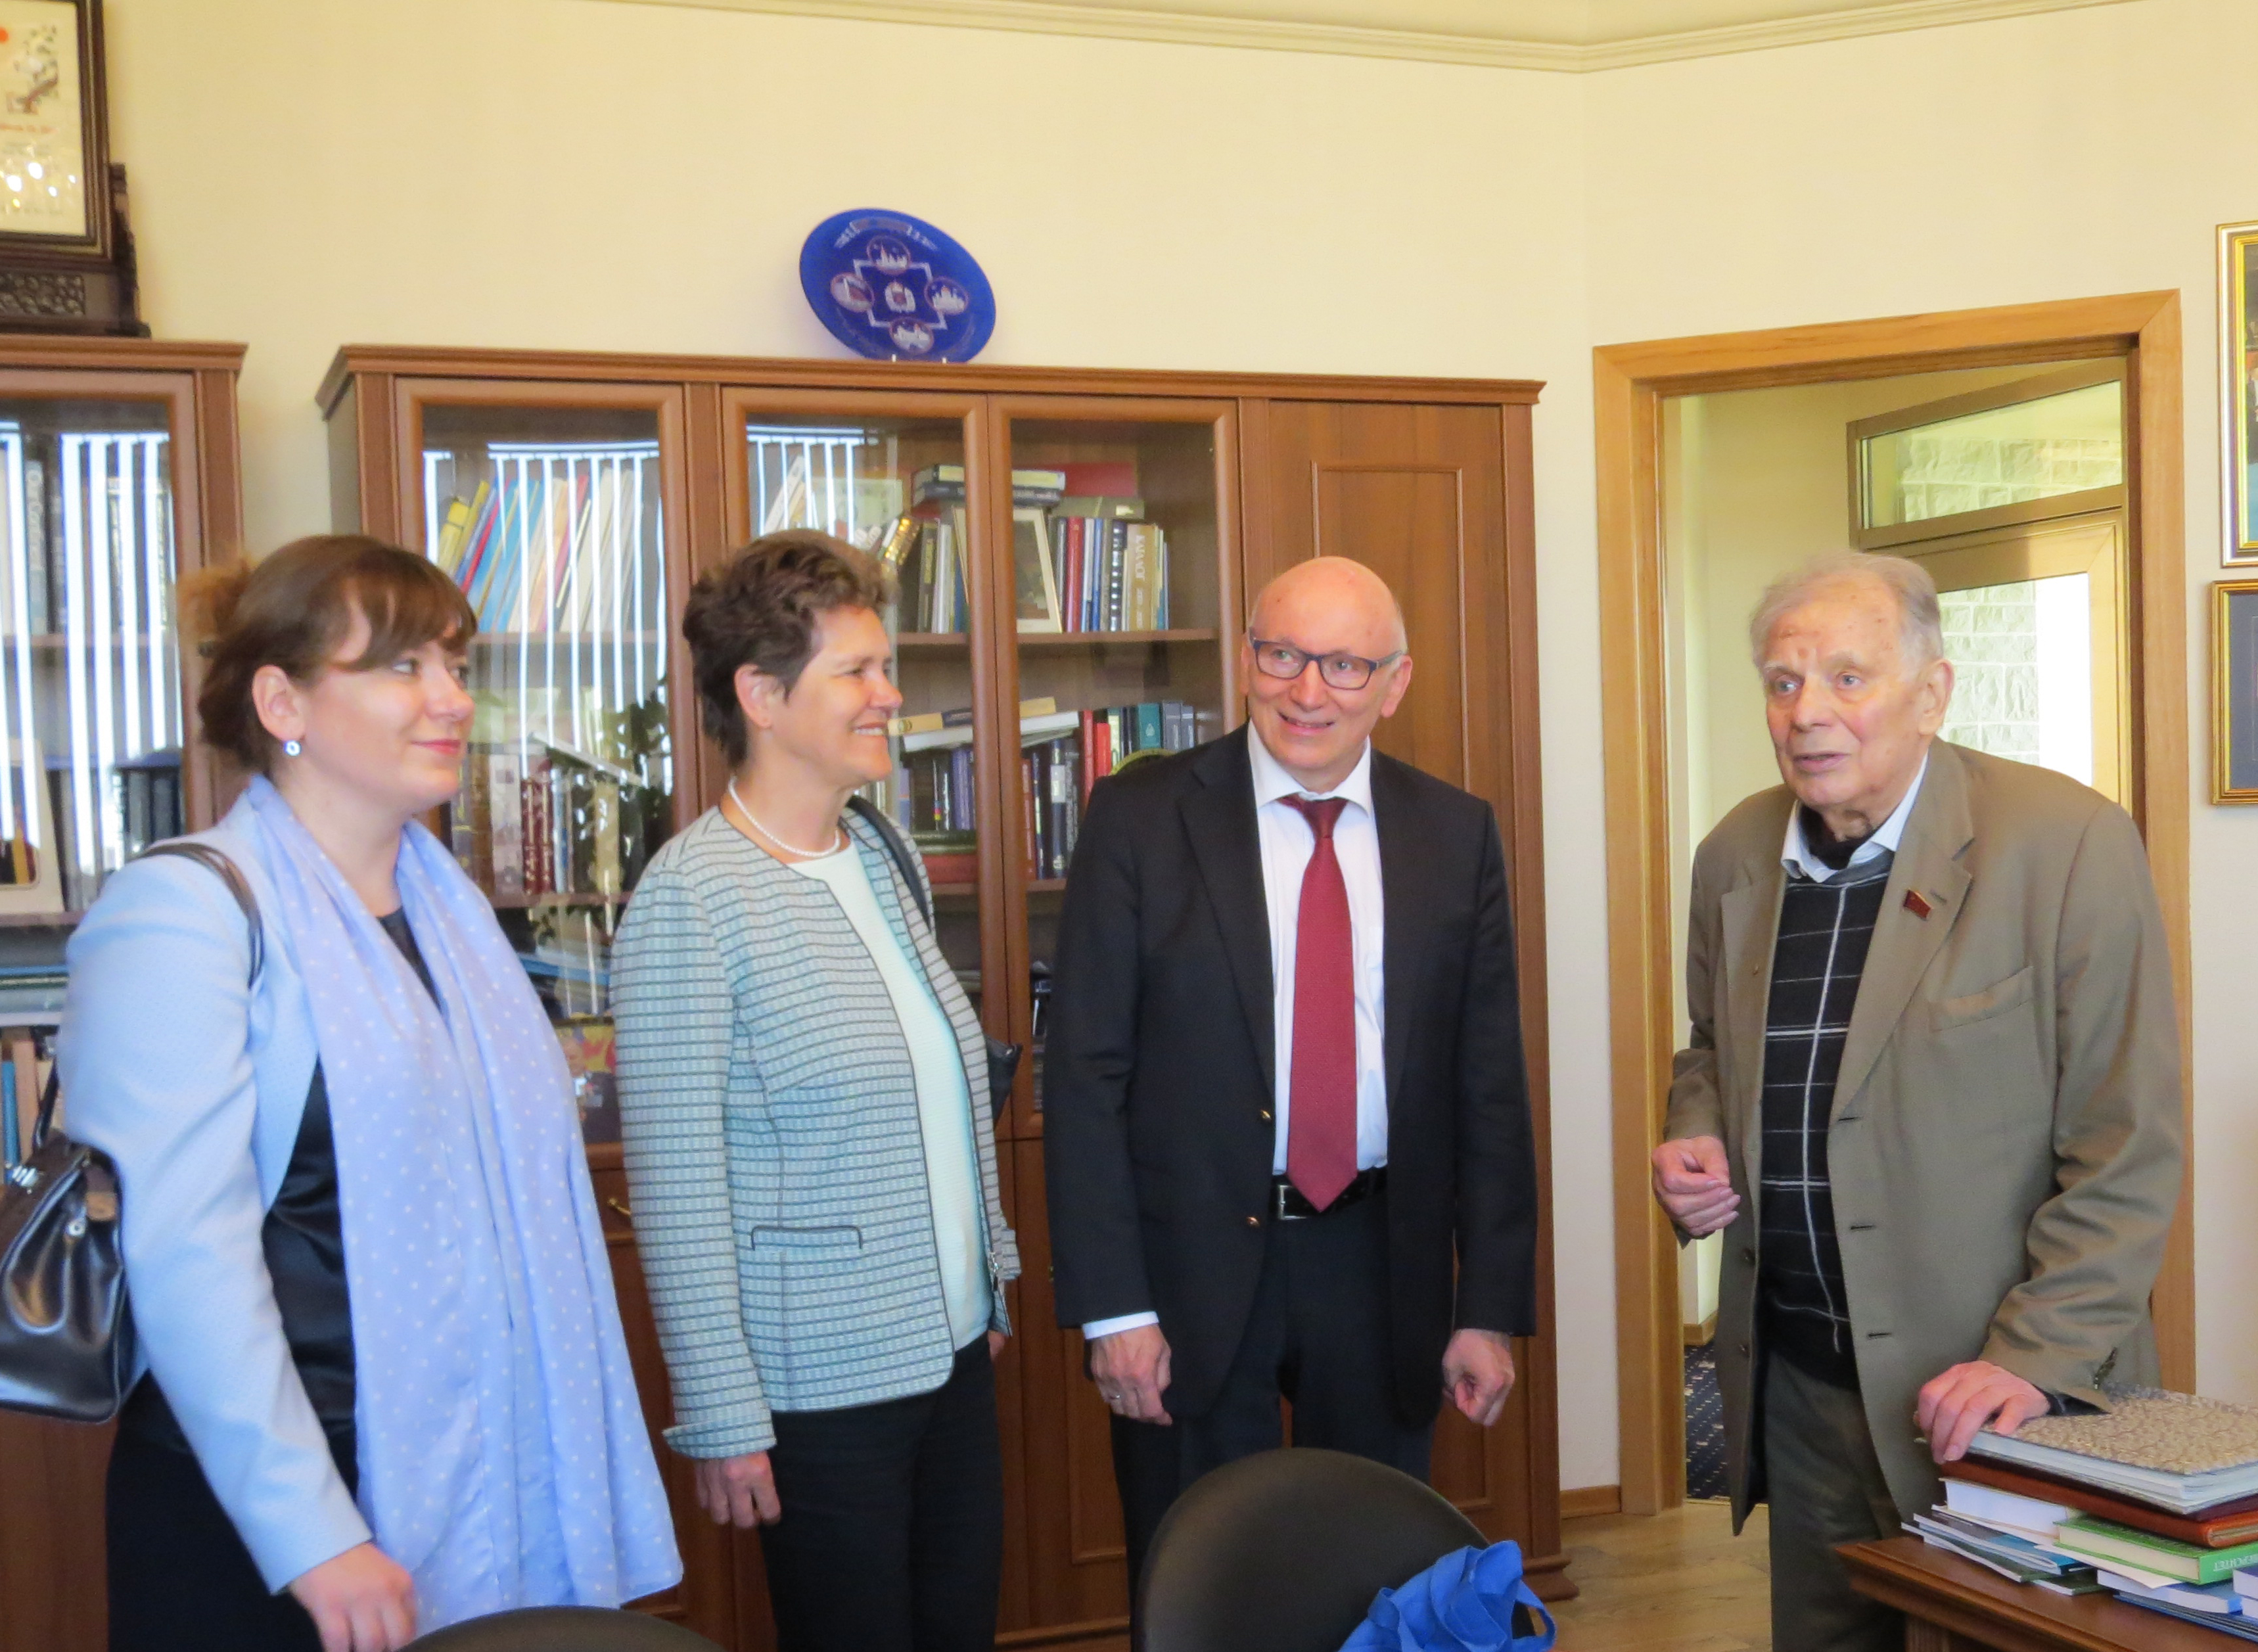 Wilma Rethage, Karin Zach and Wolfgang Ertmer in conversation with Nobel Prize winner Prof. Zhores Alferov, St. Petersburg Academic University